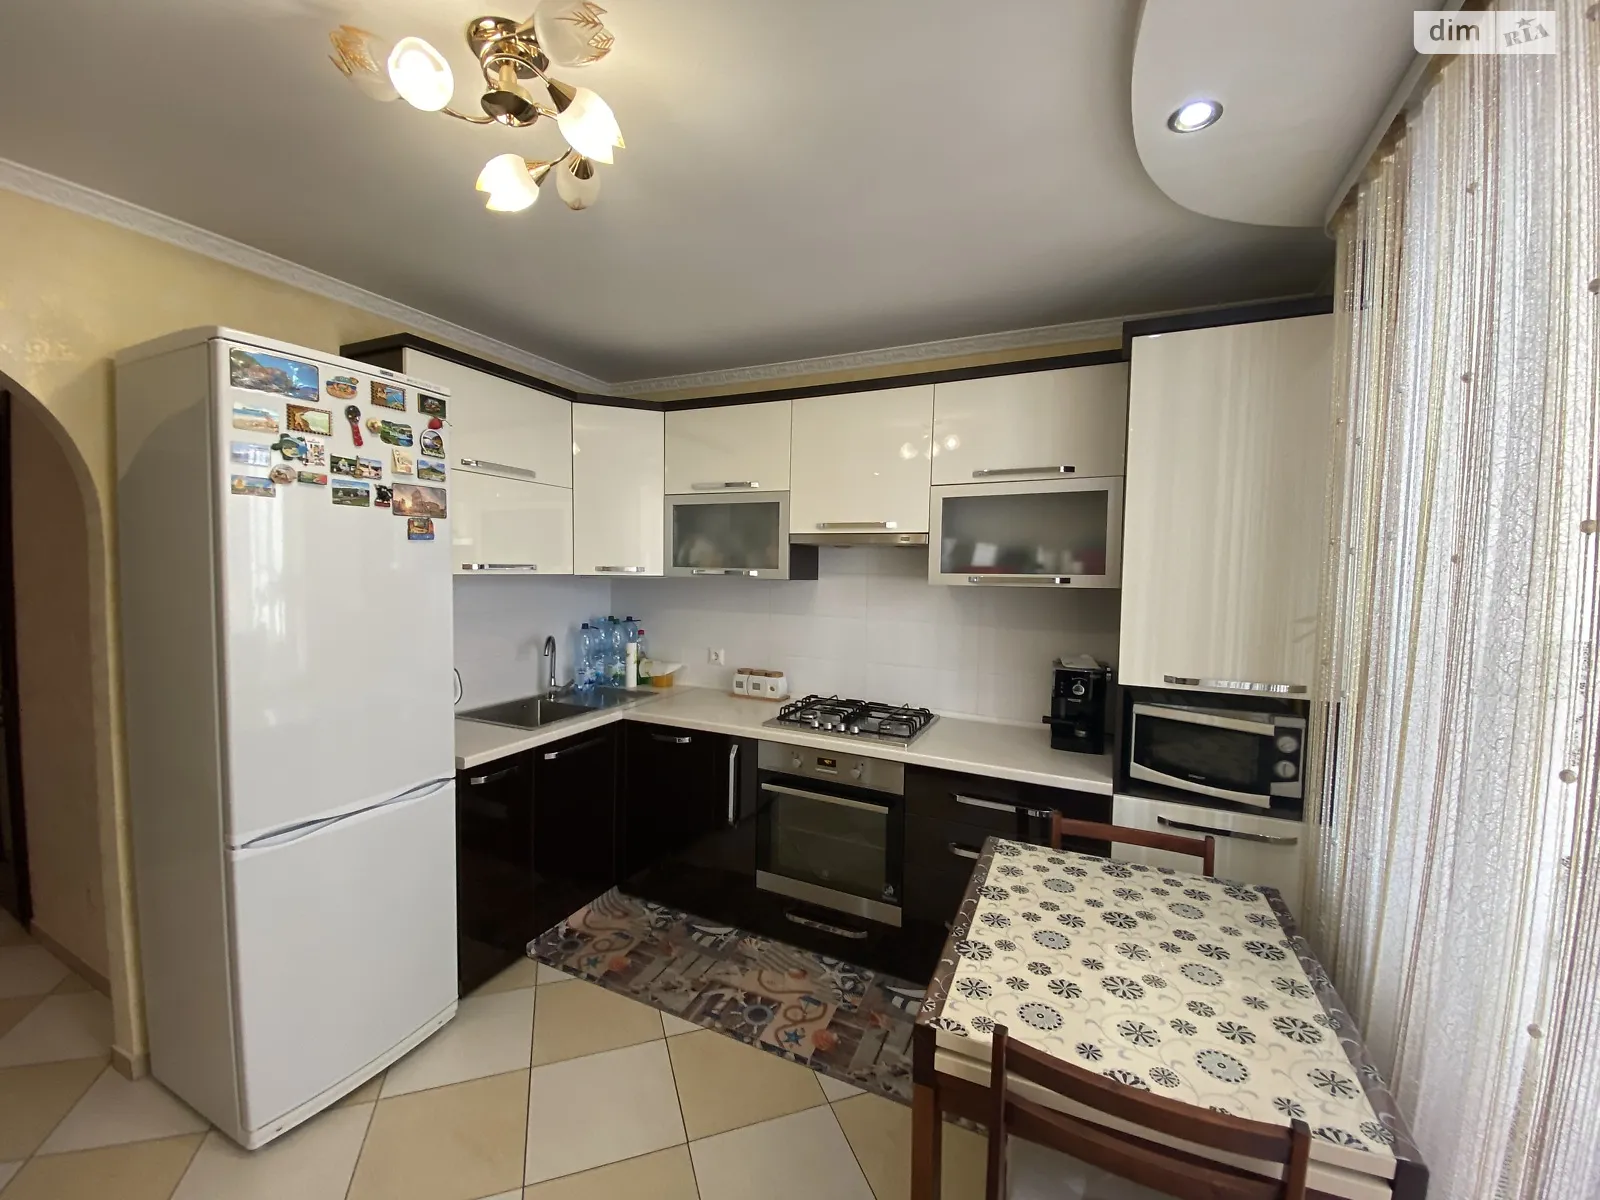 1-кімнатна квартира 40 кв. м у Тернополі, цена: 53000 $ - фото 1